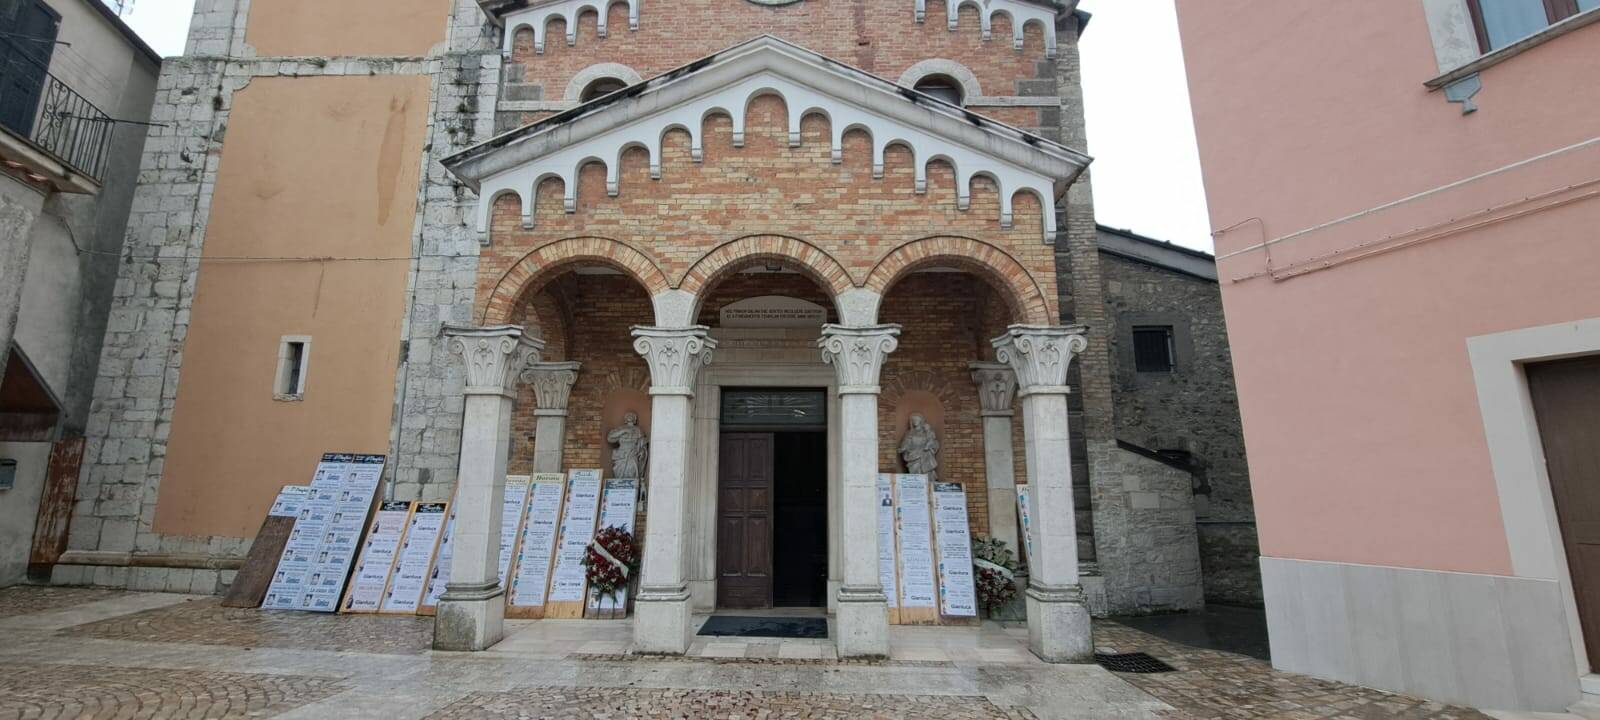 Funerali Gianluca De santis palata